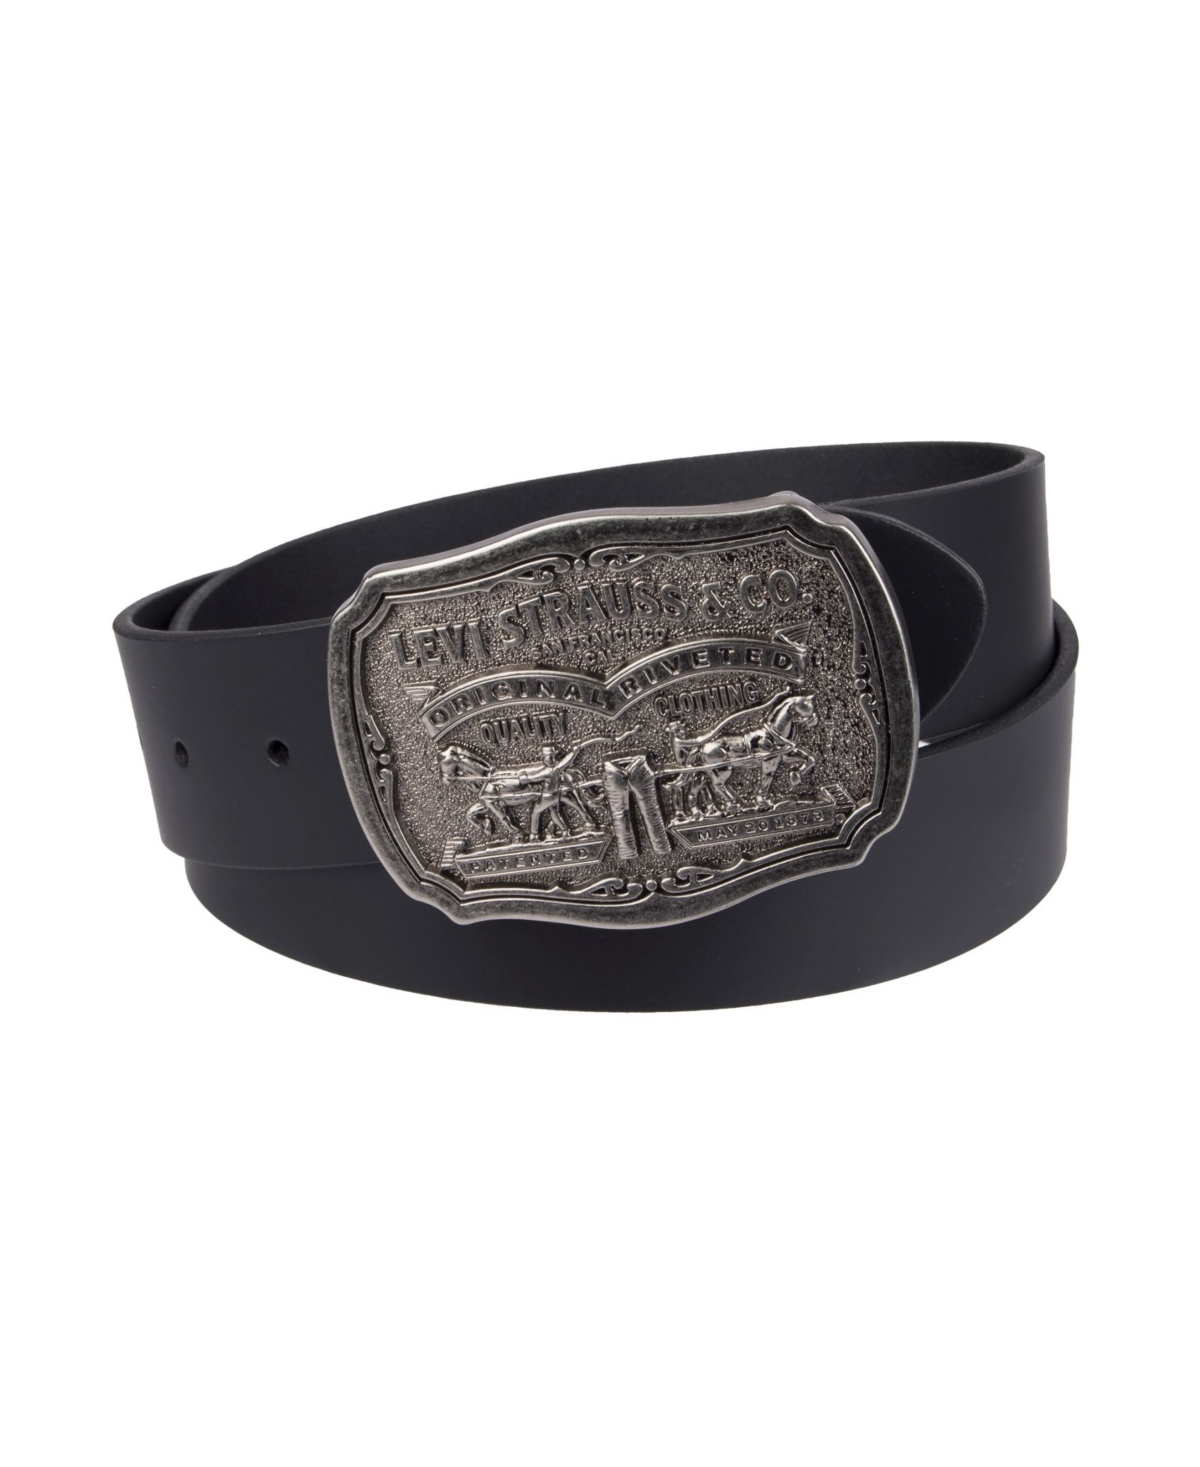 Leather Men's Belt with Plaque Buckle - Black